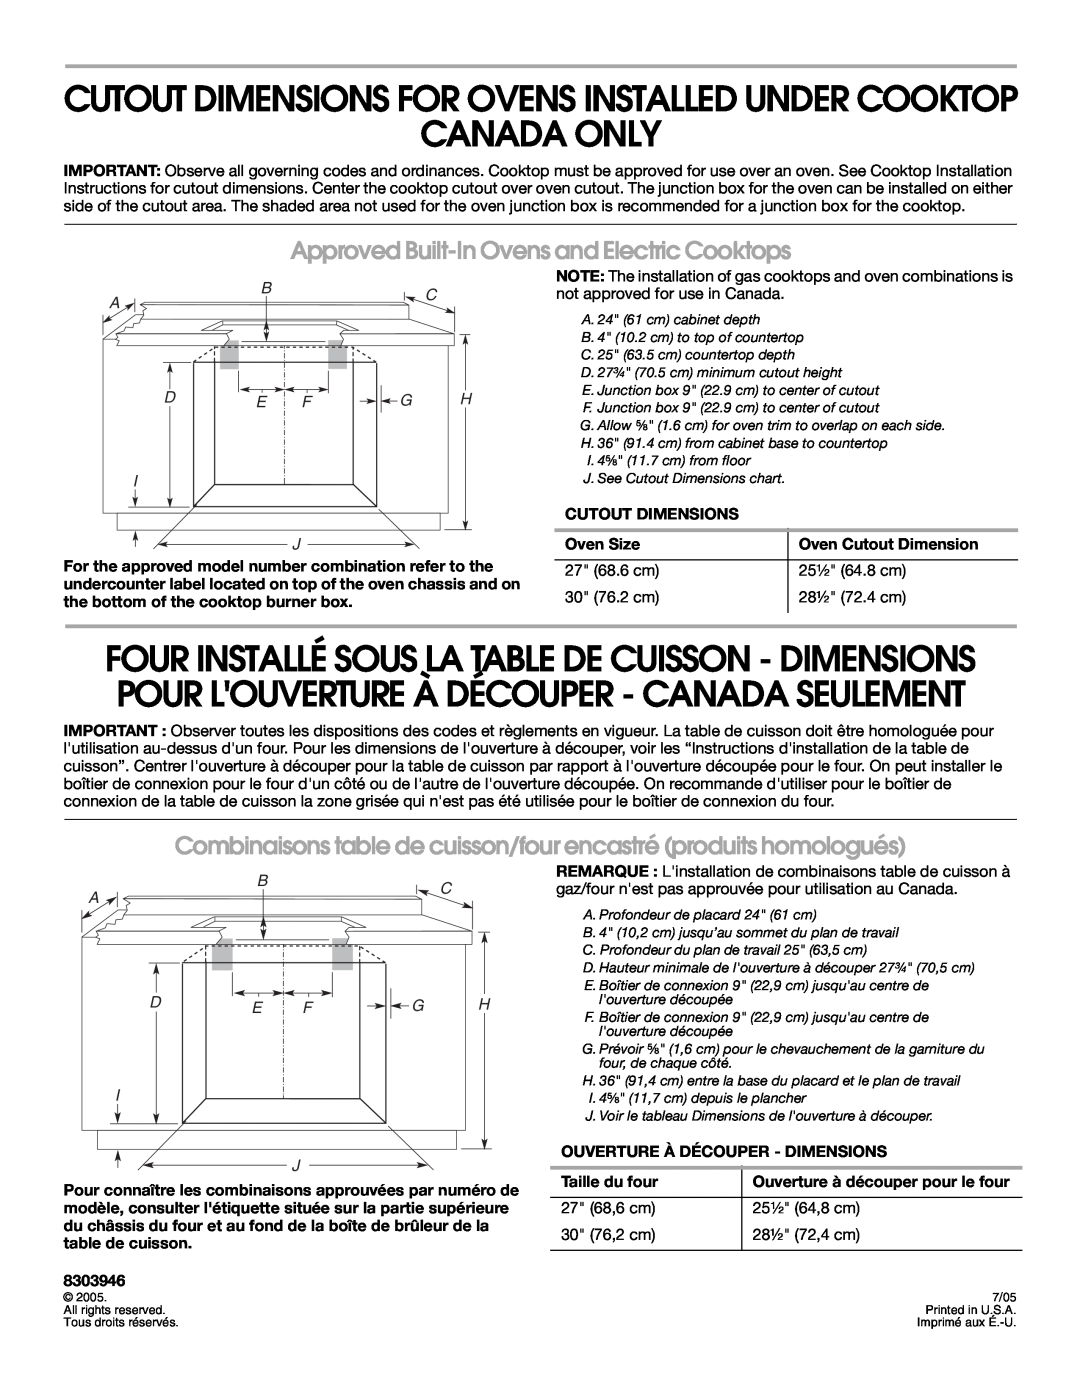 KitchenAid Convection Oven, 288 Canada Only, Cutout Dimensions, Oven Size, Oven Cutout Dimension, Taille du four, 8303946 